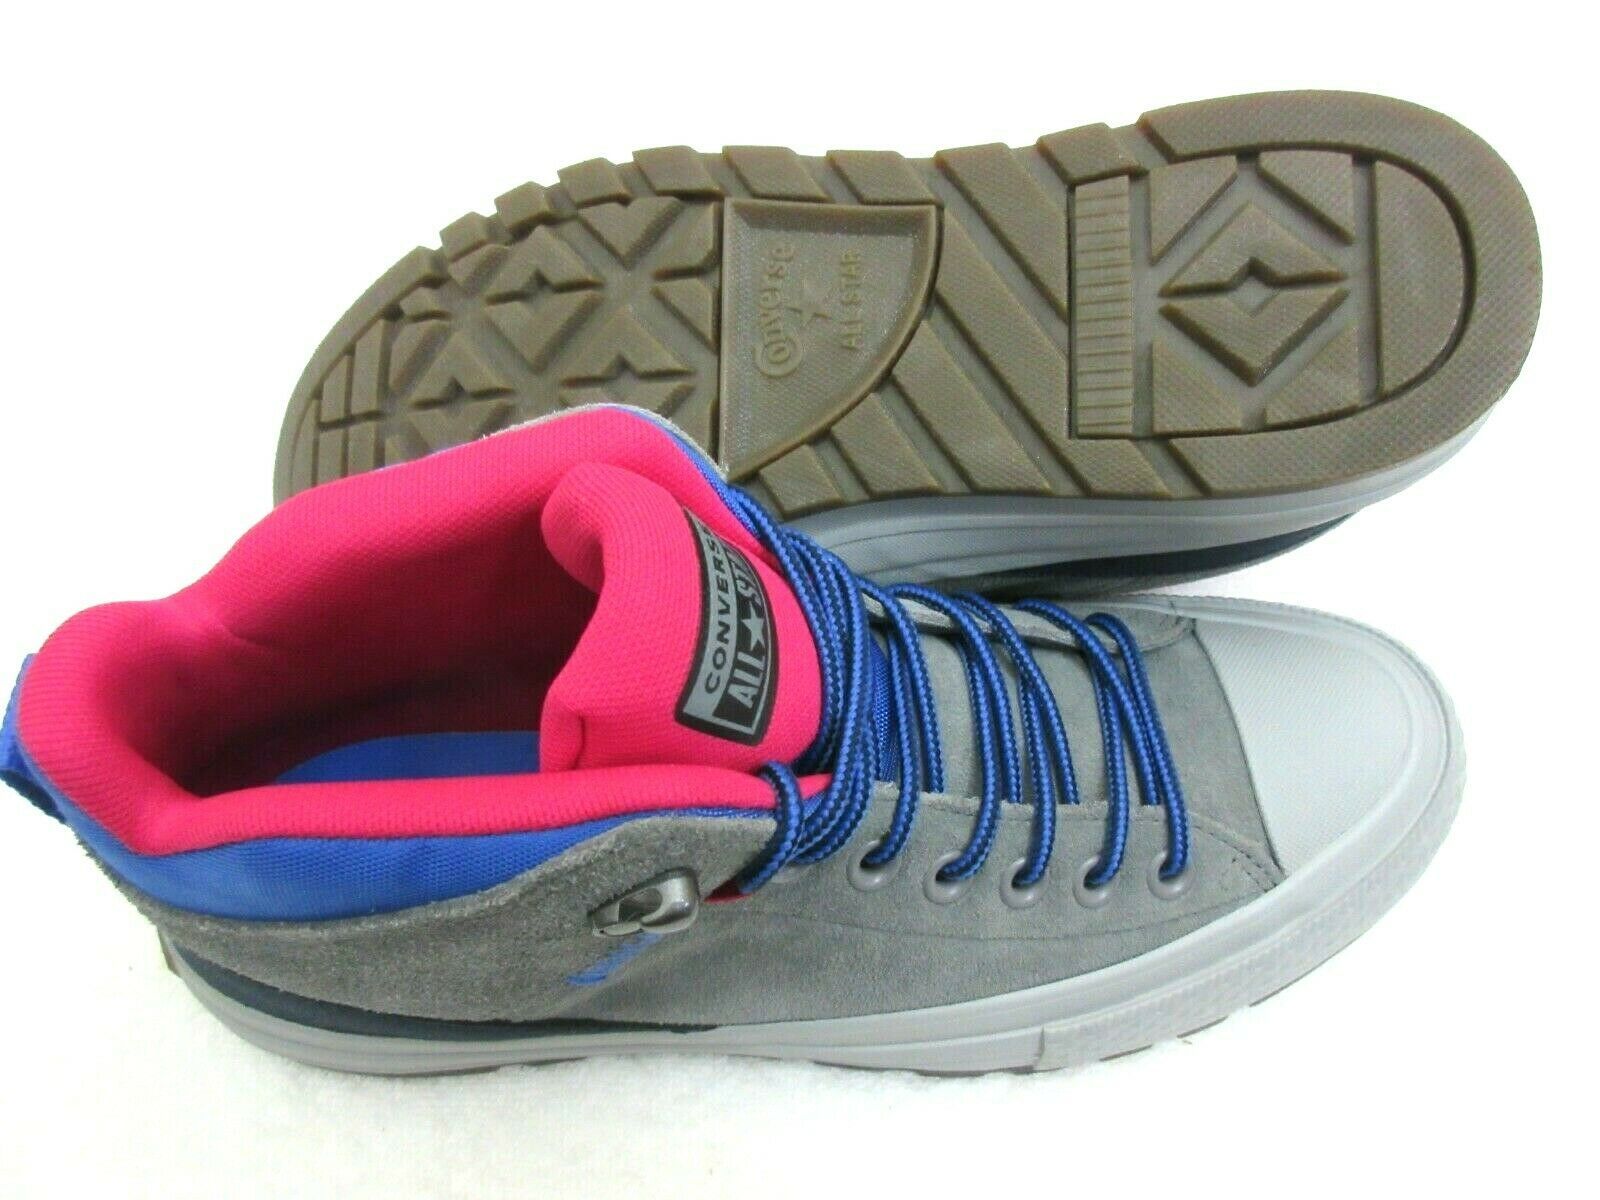 Converse Mens CTAS Street Boot Hi Hiking Casual Shoes Grey Blue Pink Size 12 - $64.34